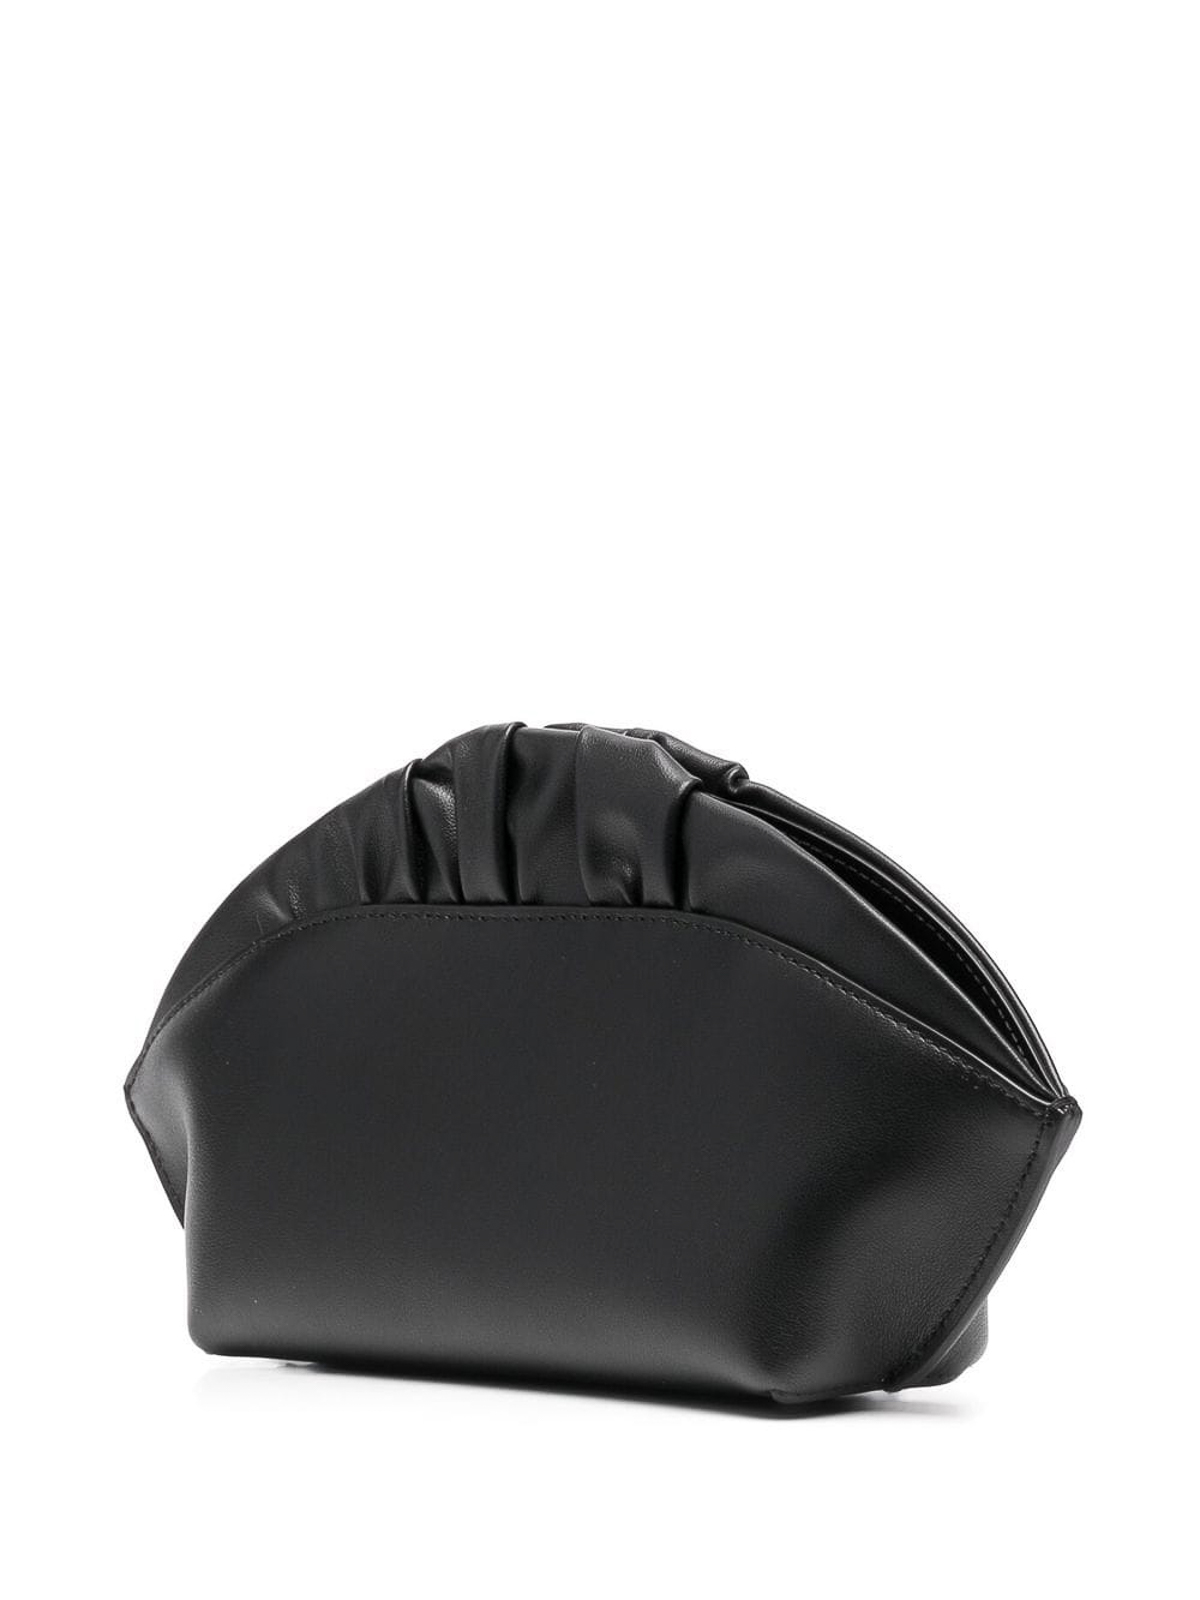 Baguette leather clutch bag